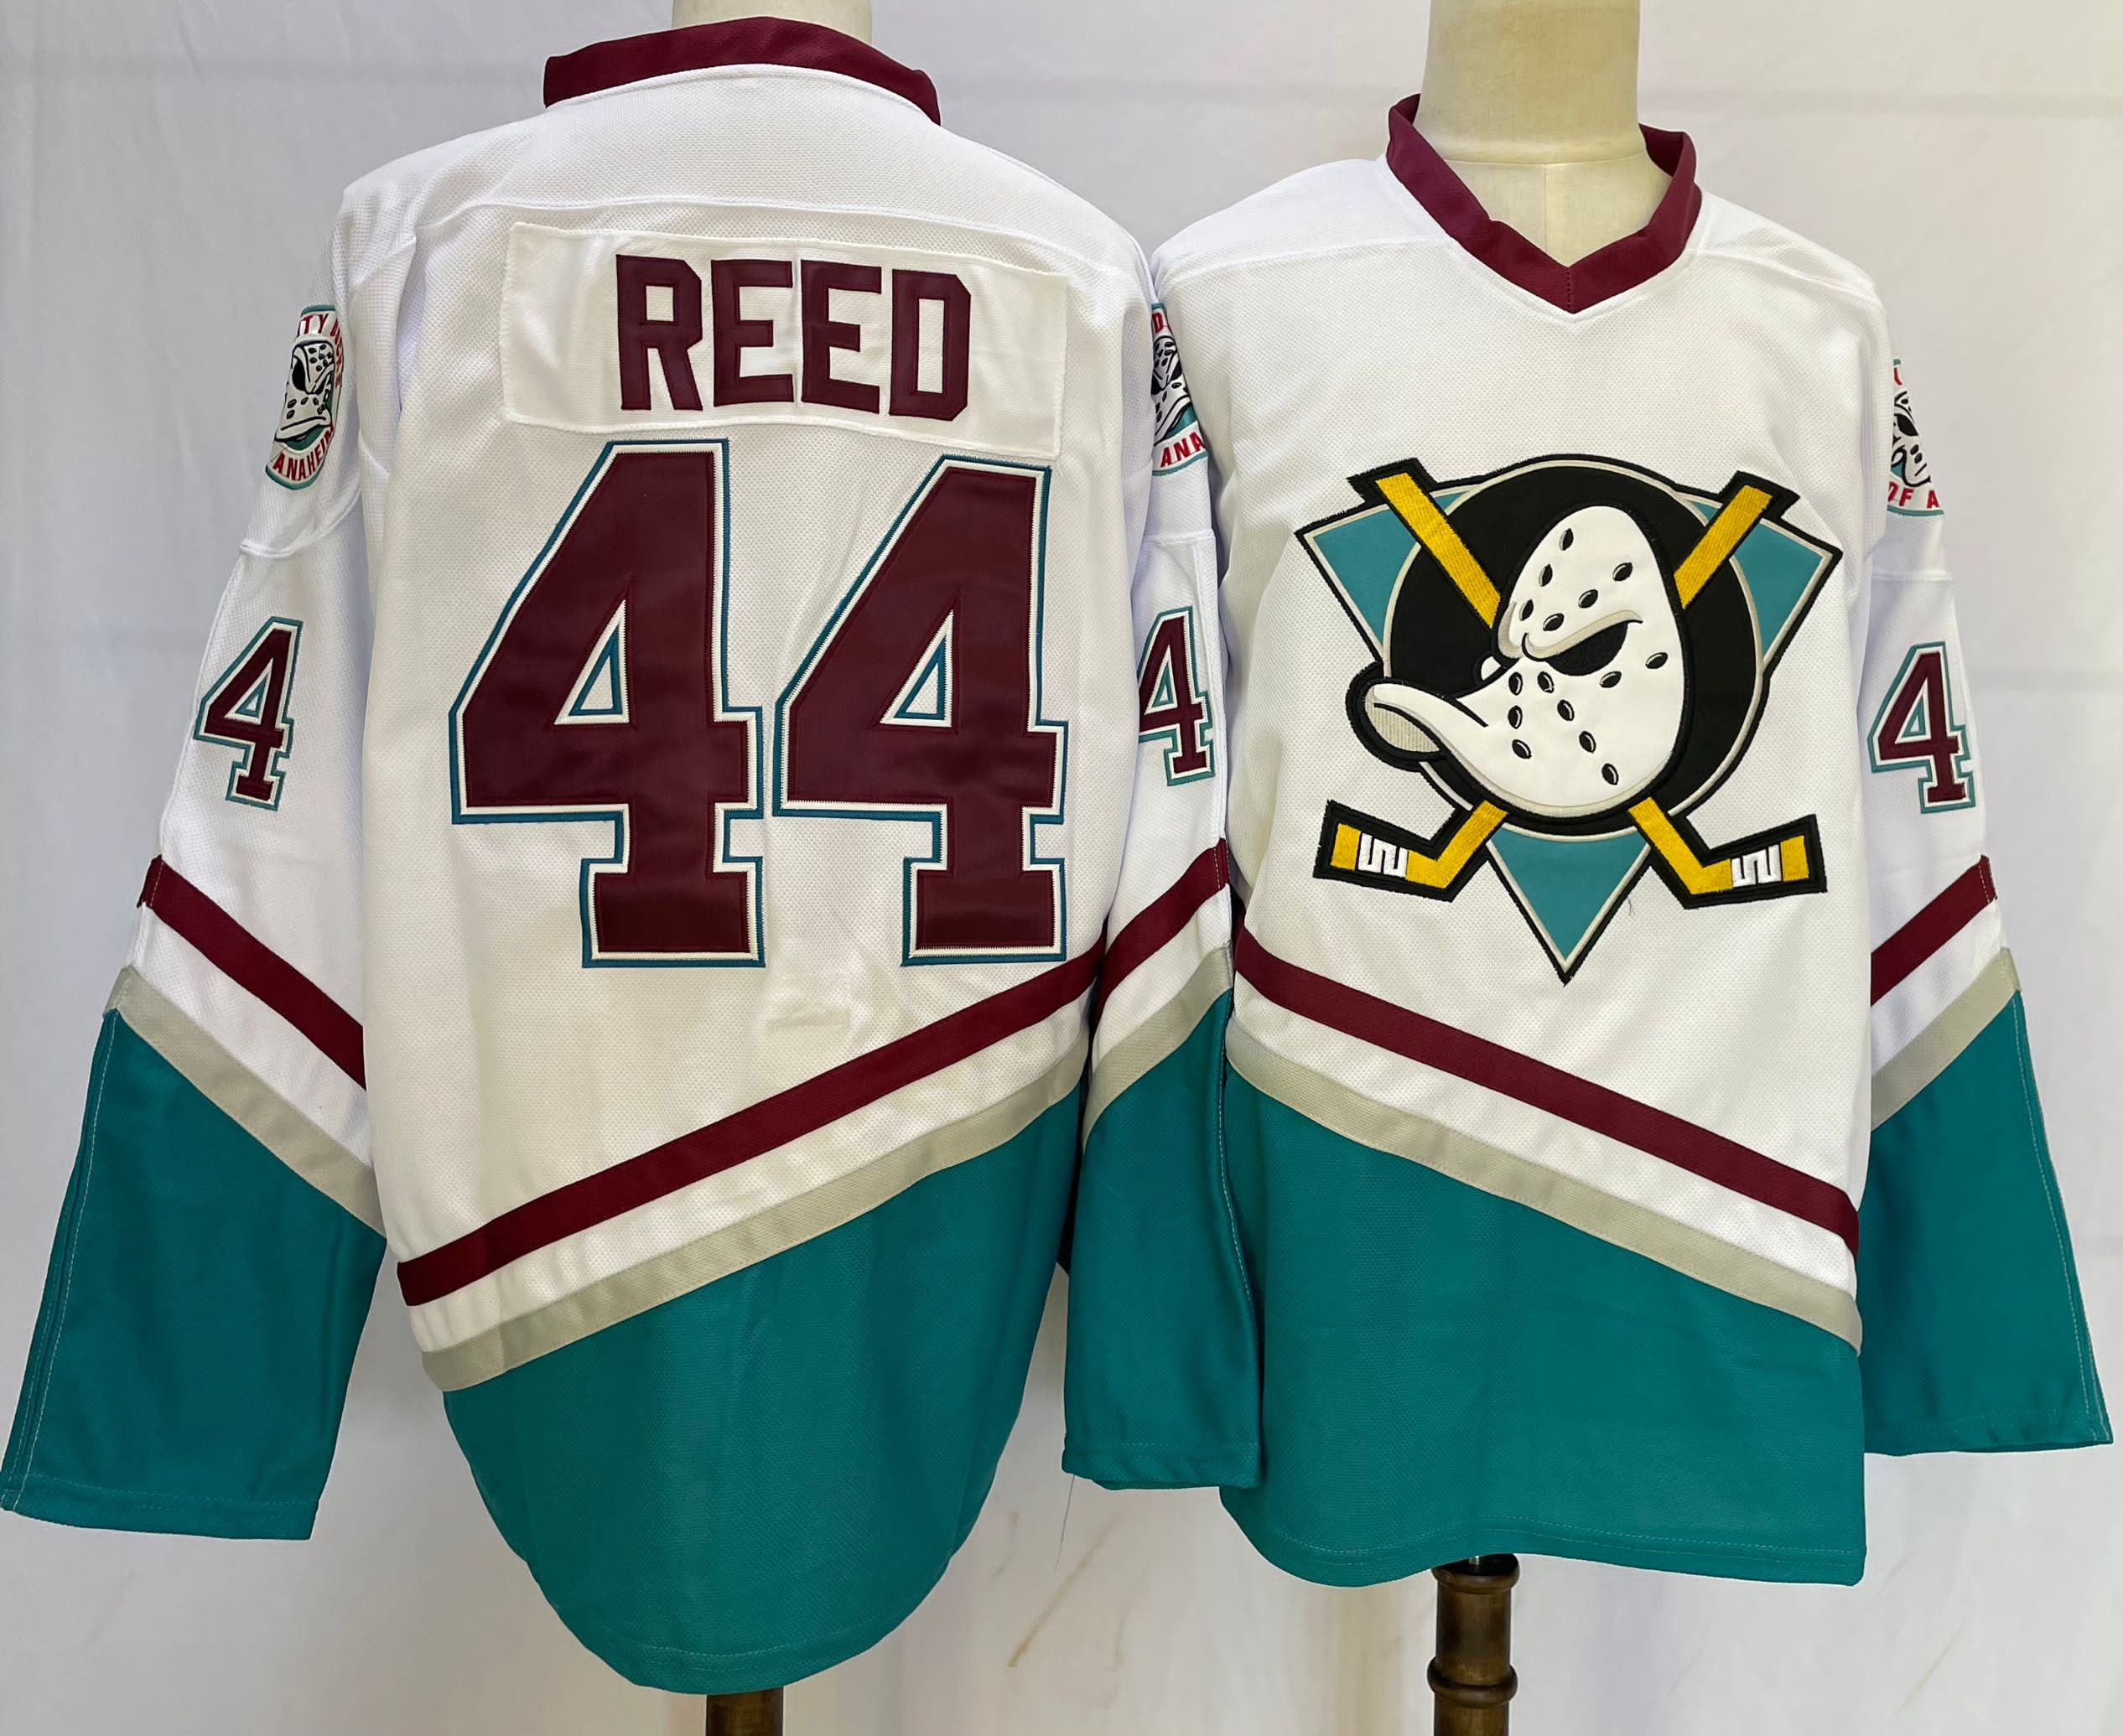 Men's Anaheim Ducks #44 Reed white teal Stitched Jersey